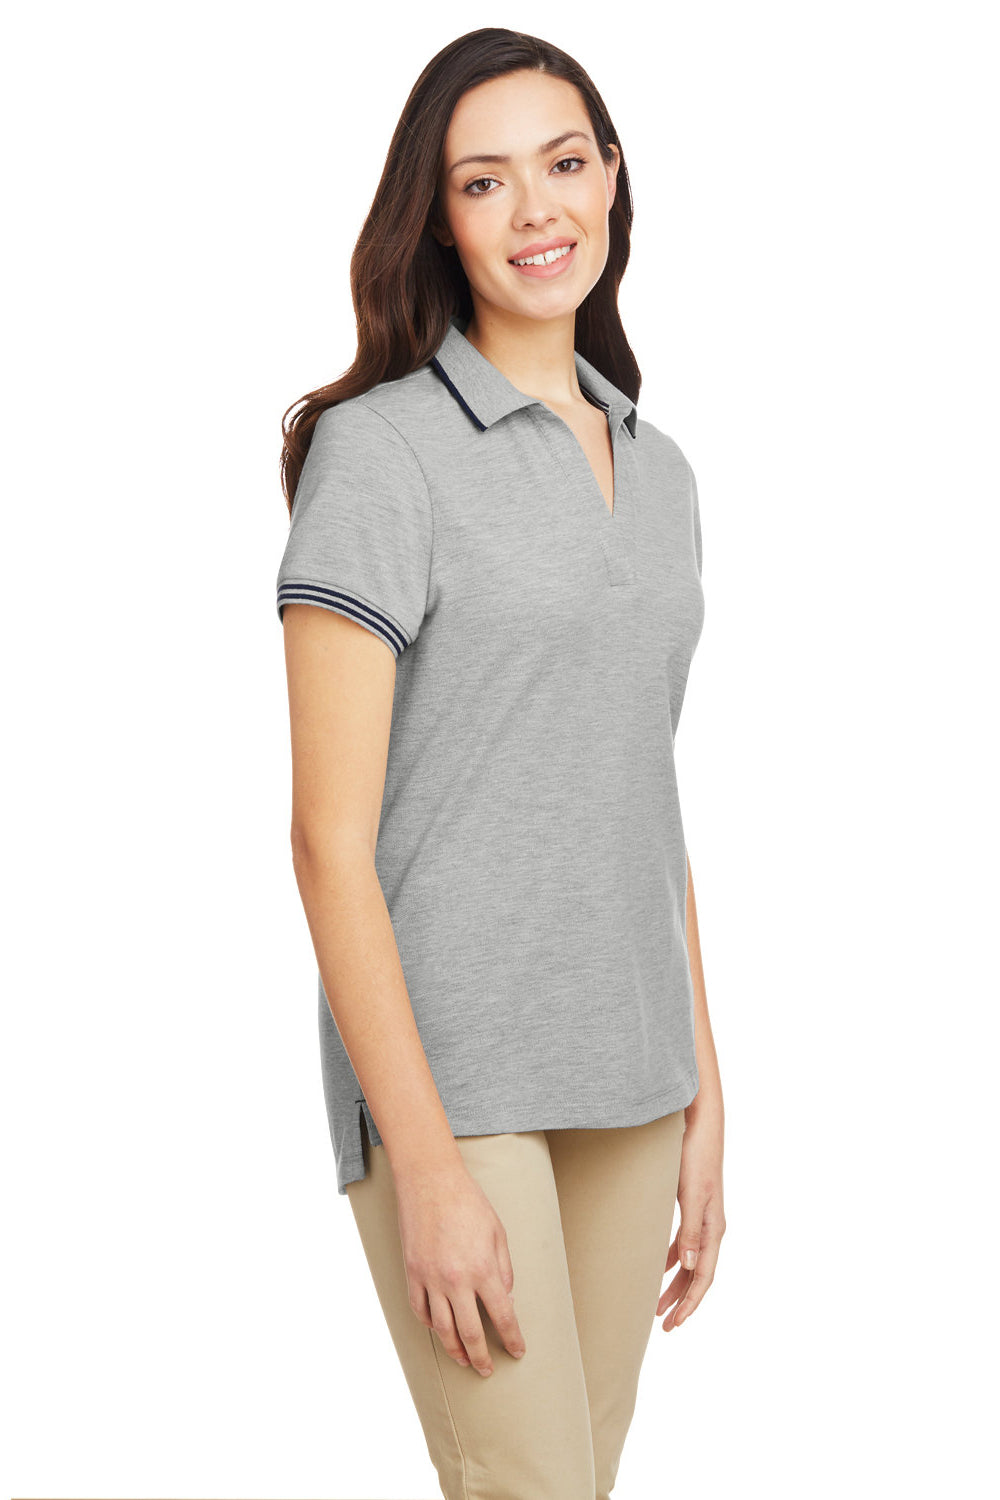 Nautica N17168 Womens Desk Short Sleeve Polo Shirt Oxford Grey/Navy Blue 3Q